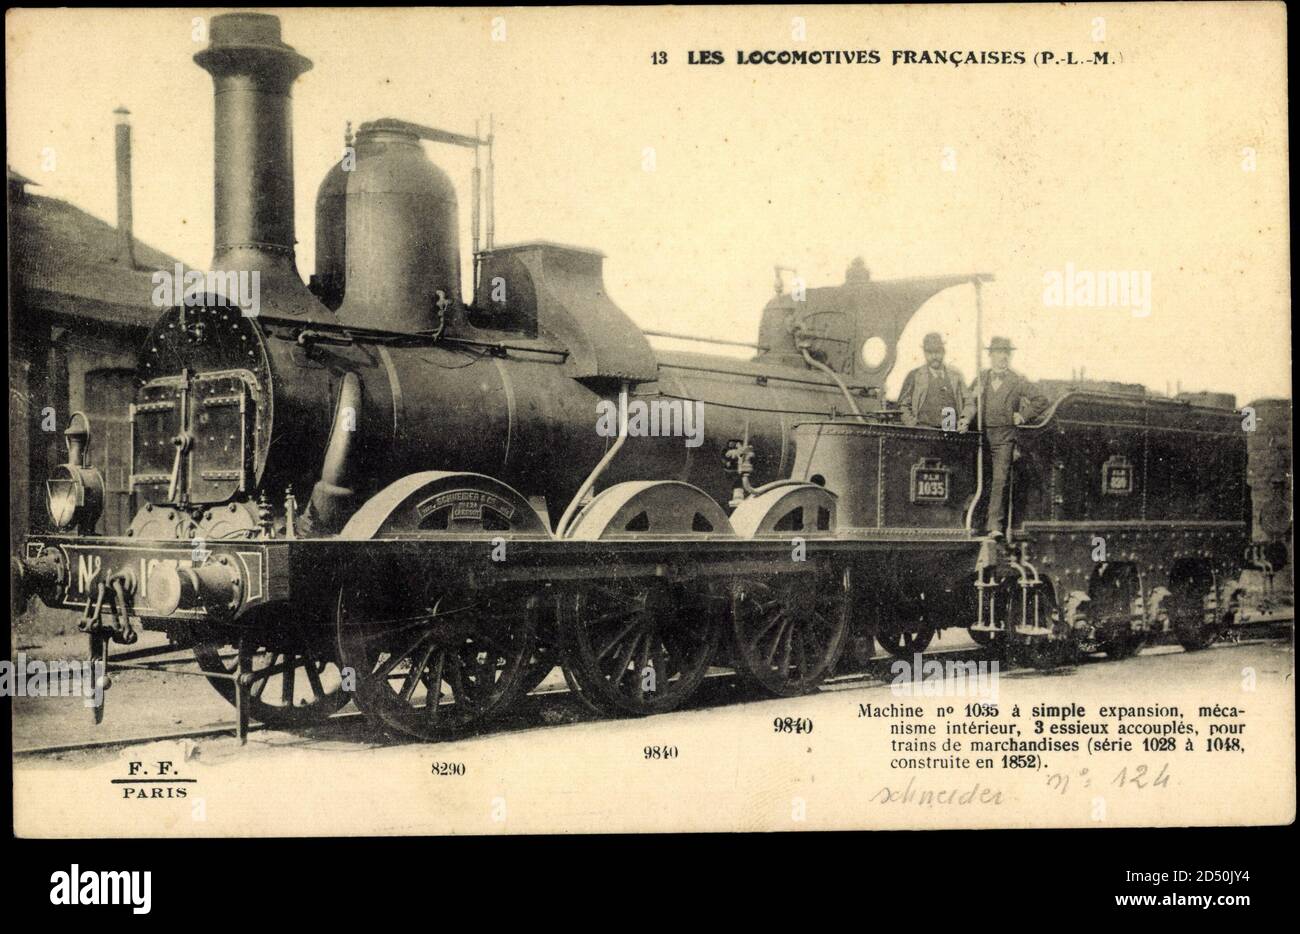 Locomotives Francaises, P.L.M, Machine No 1035 | usage worldwide Stock Photo